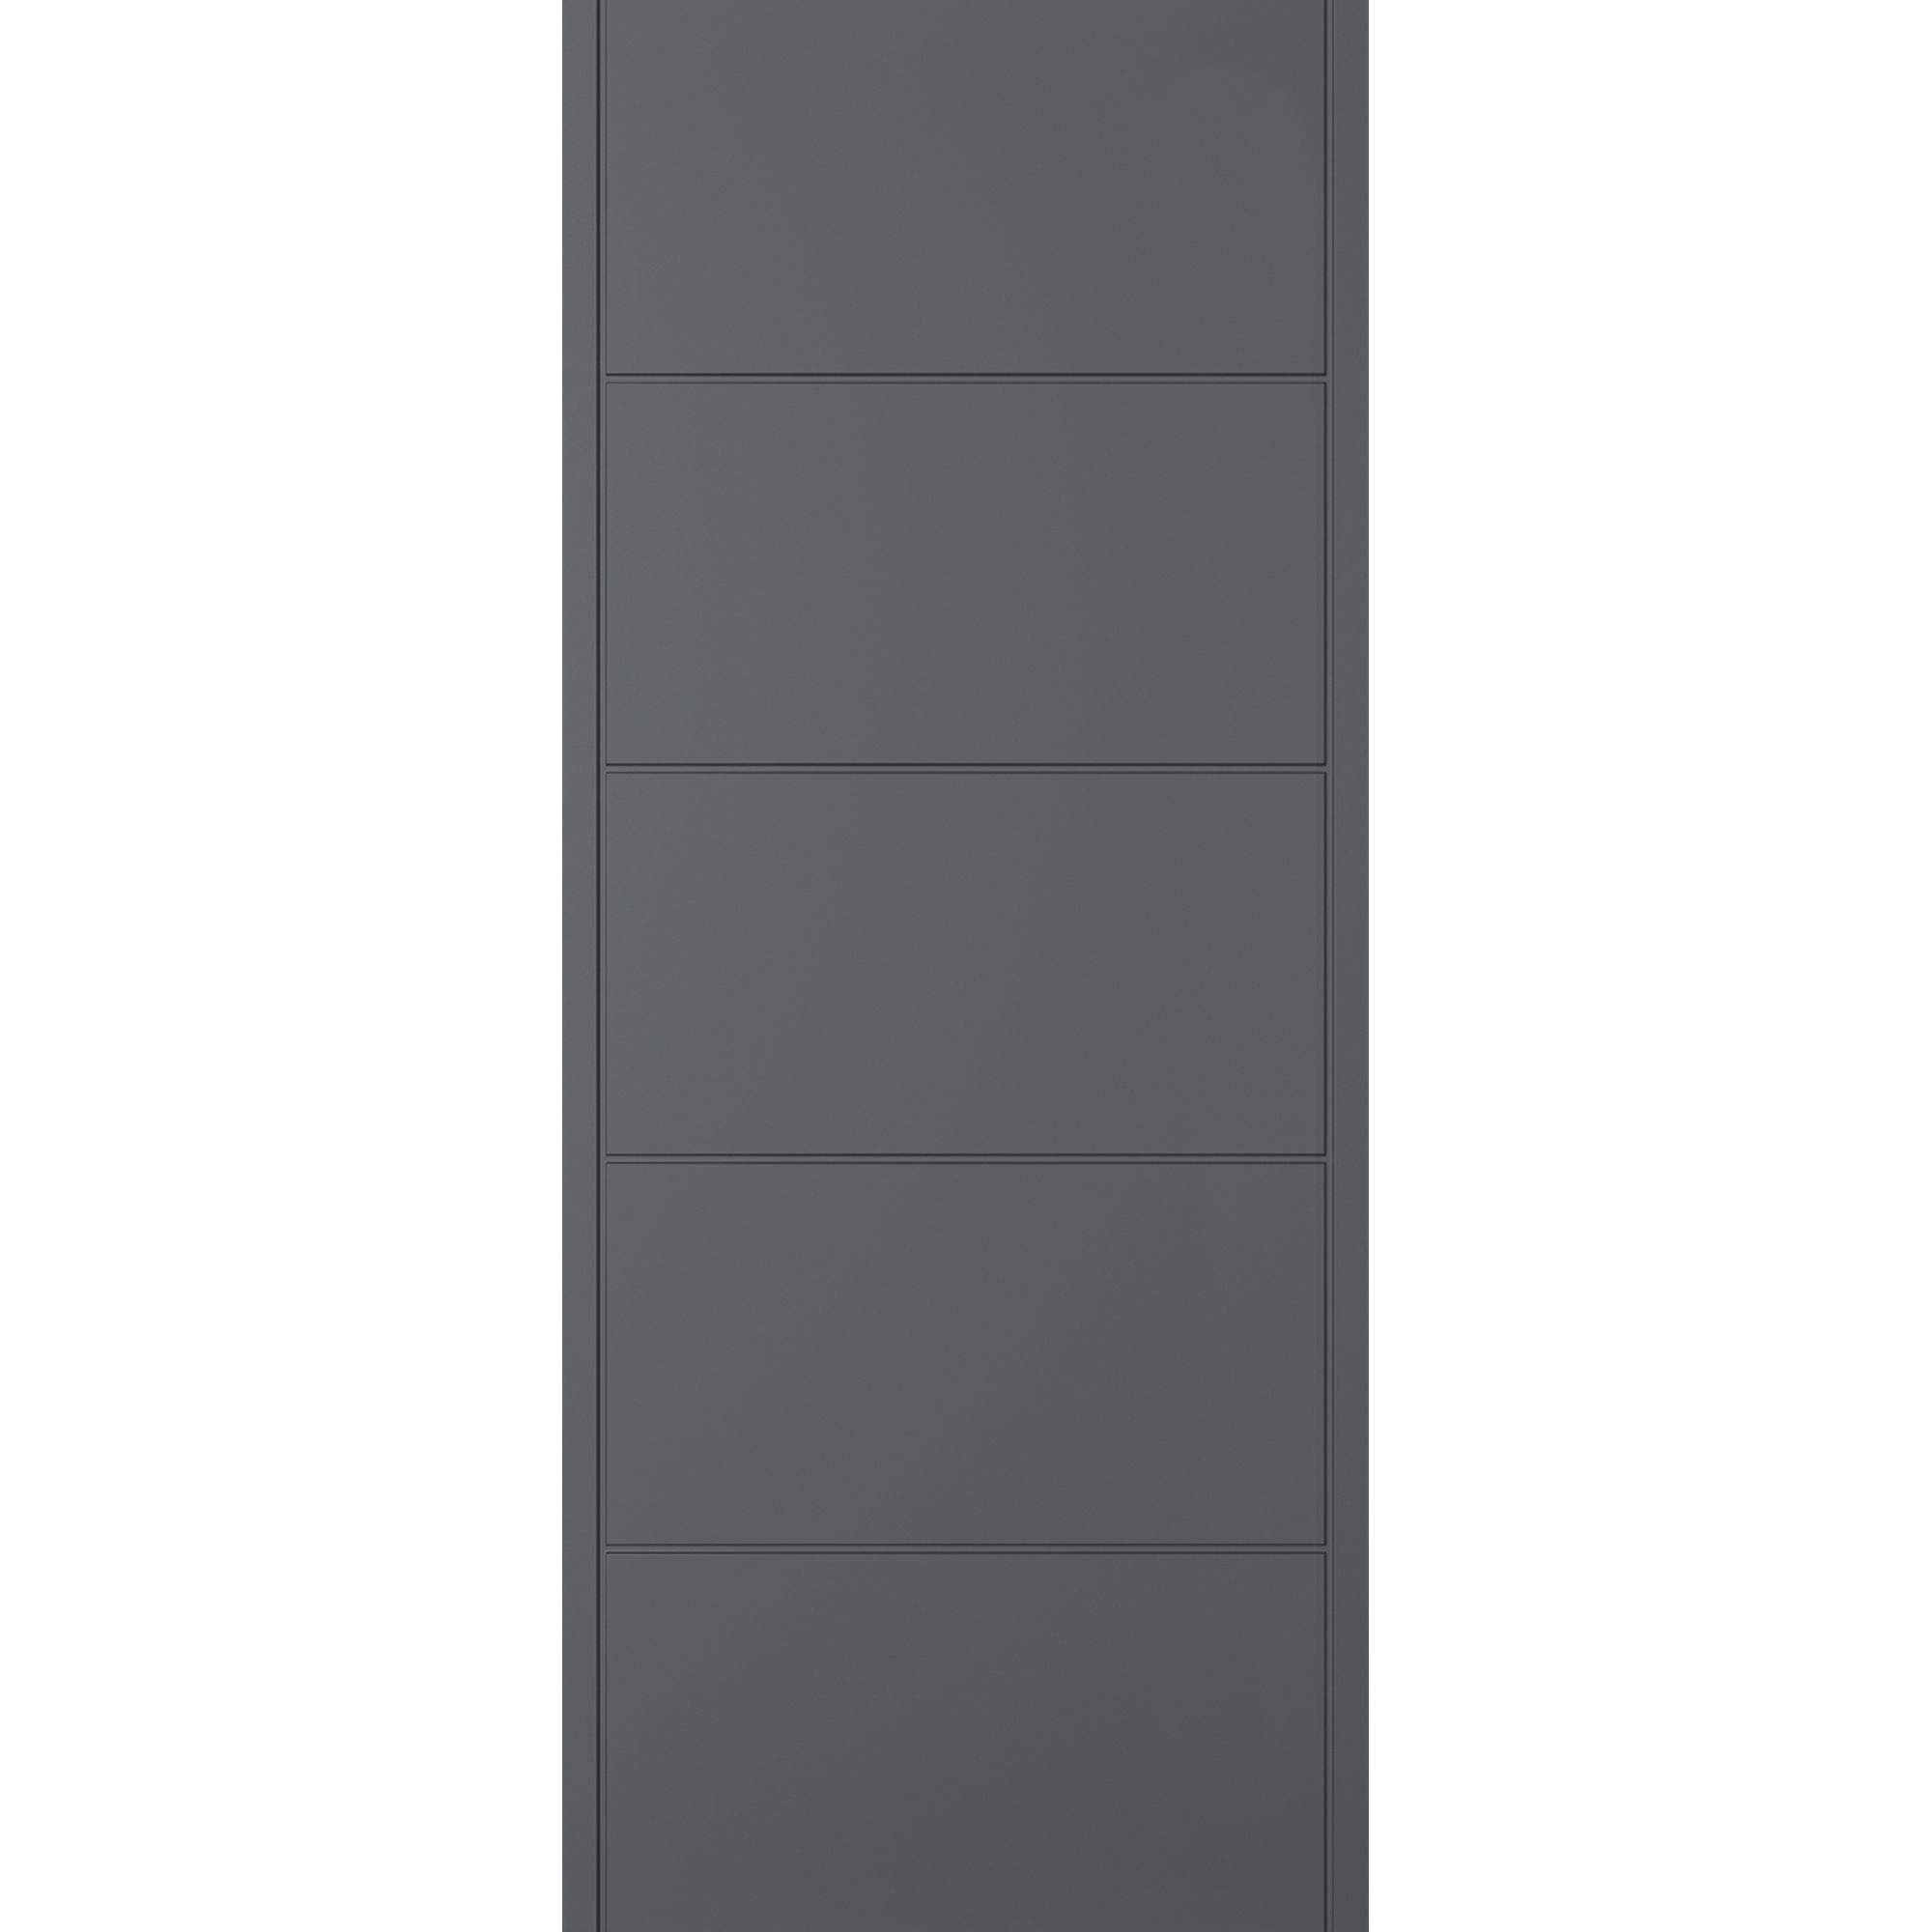 Linear 5 panel Unglazed Shaker Anthracite Composite External Panel Front door, (H)1981mm (W)762mm